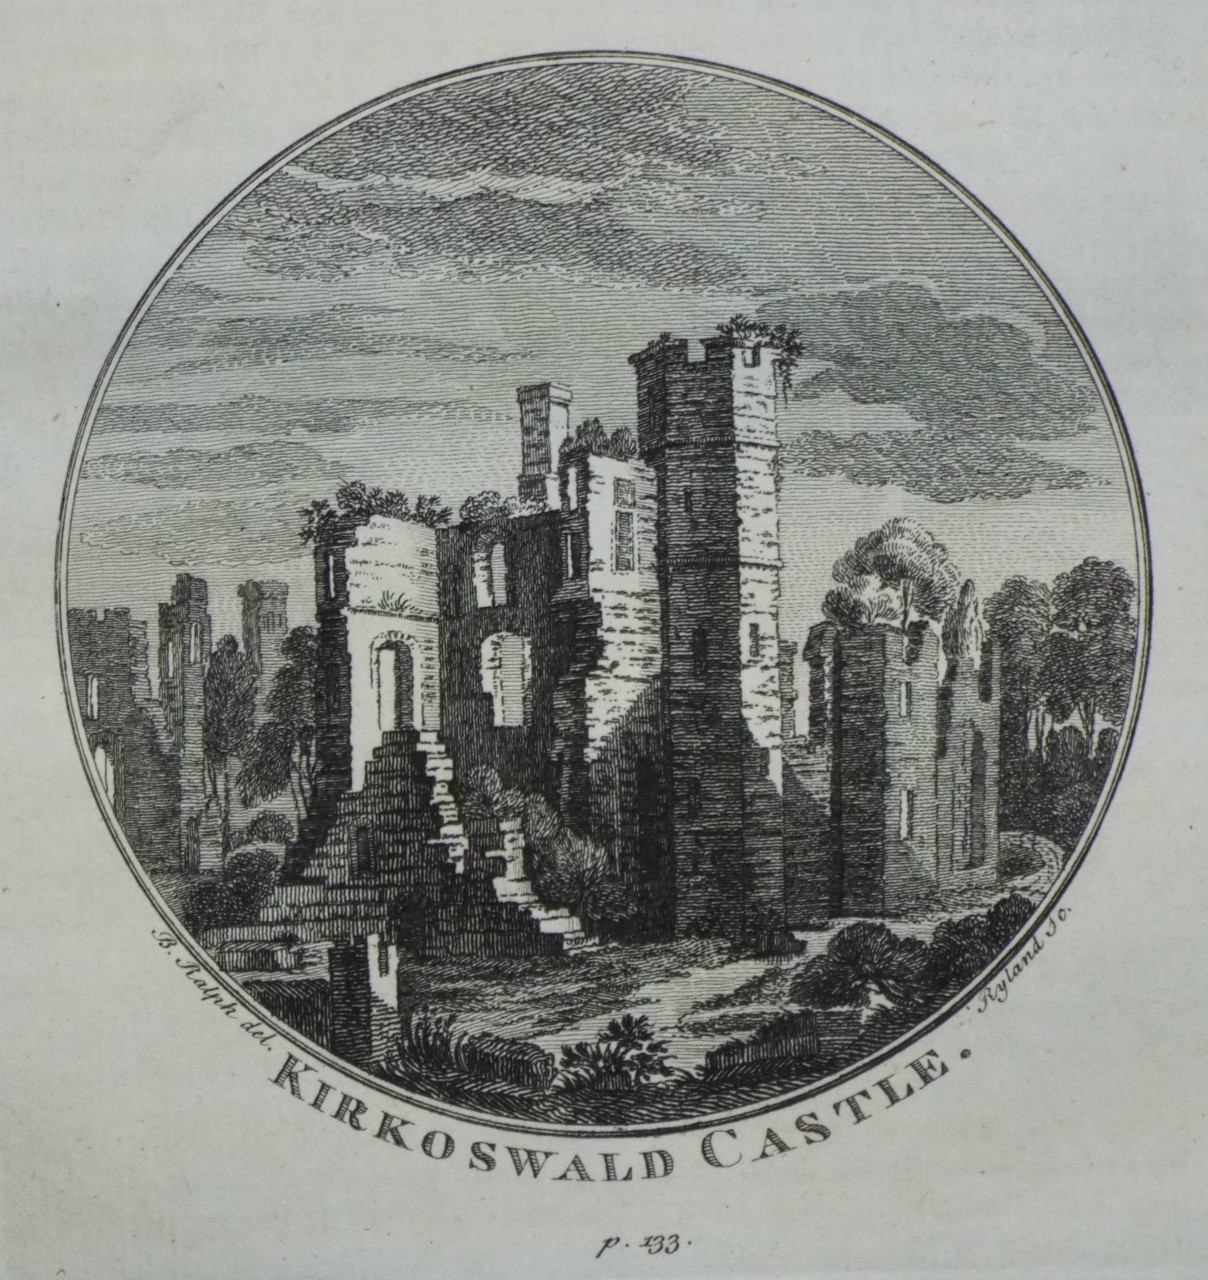 Print - Kirkoswald Castle p.133. - Ryland